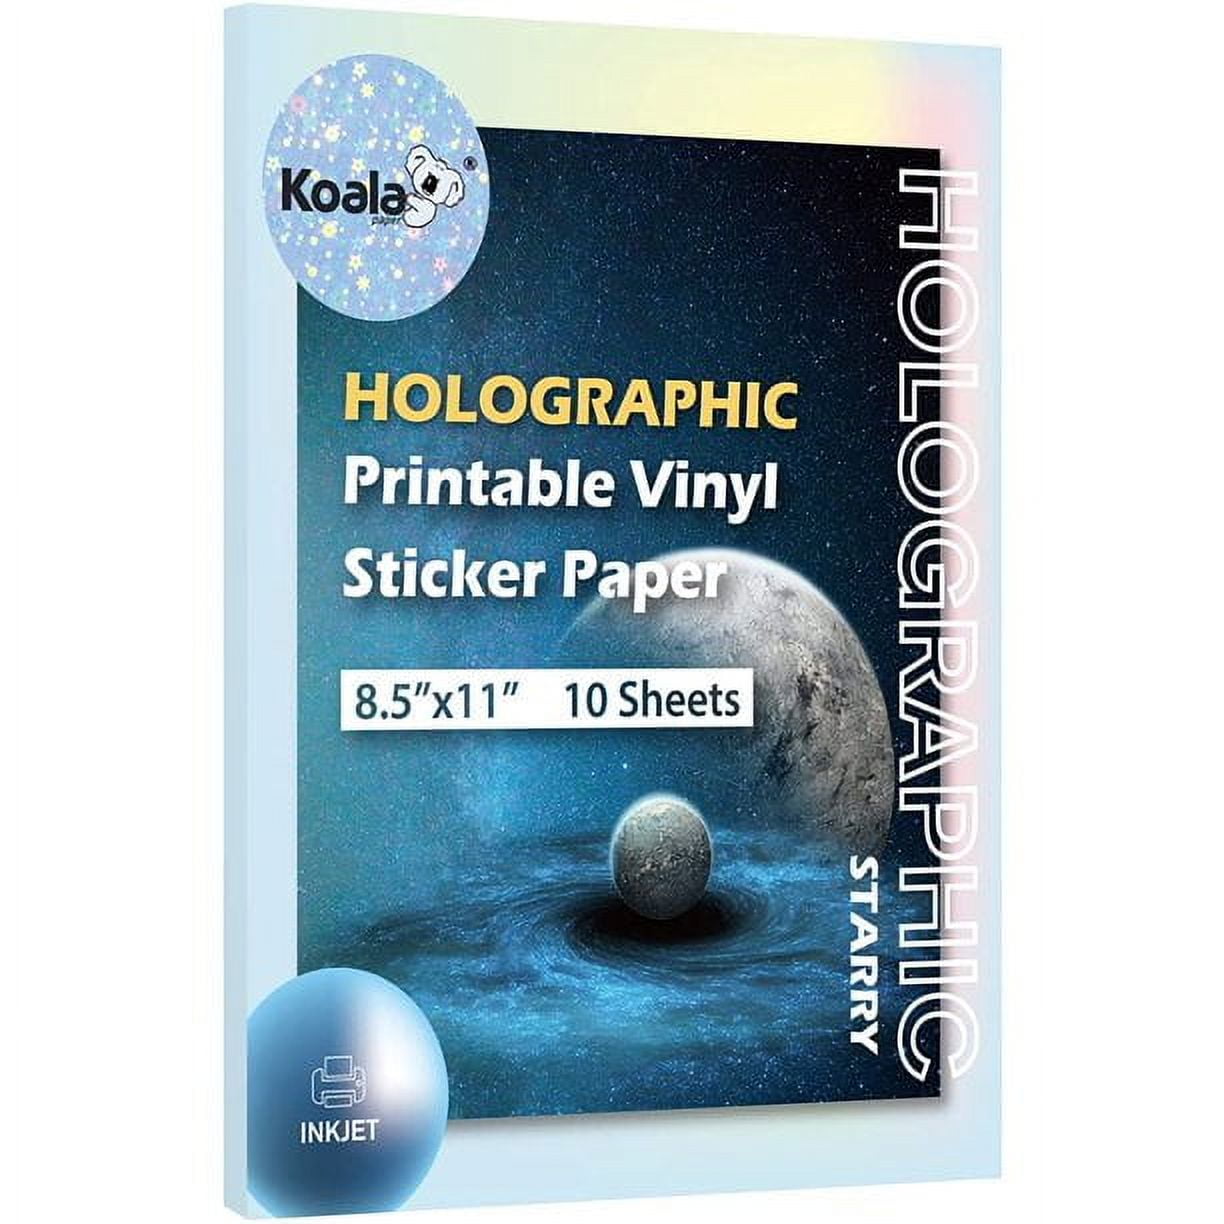 Koala Holographic Sticker Paper for Inkjet Printer Starry 10 Sheets 8.5x11  Inch Printable Vinyl Sticker Paper Rainbow Waterproof Sticker Paper,  Removable, Tear Resistant 